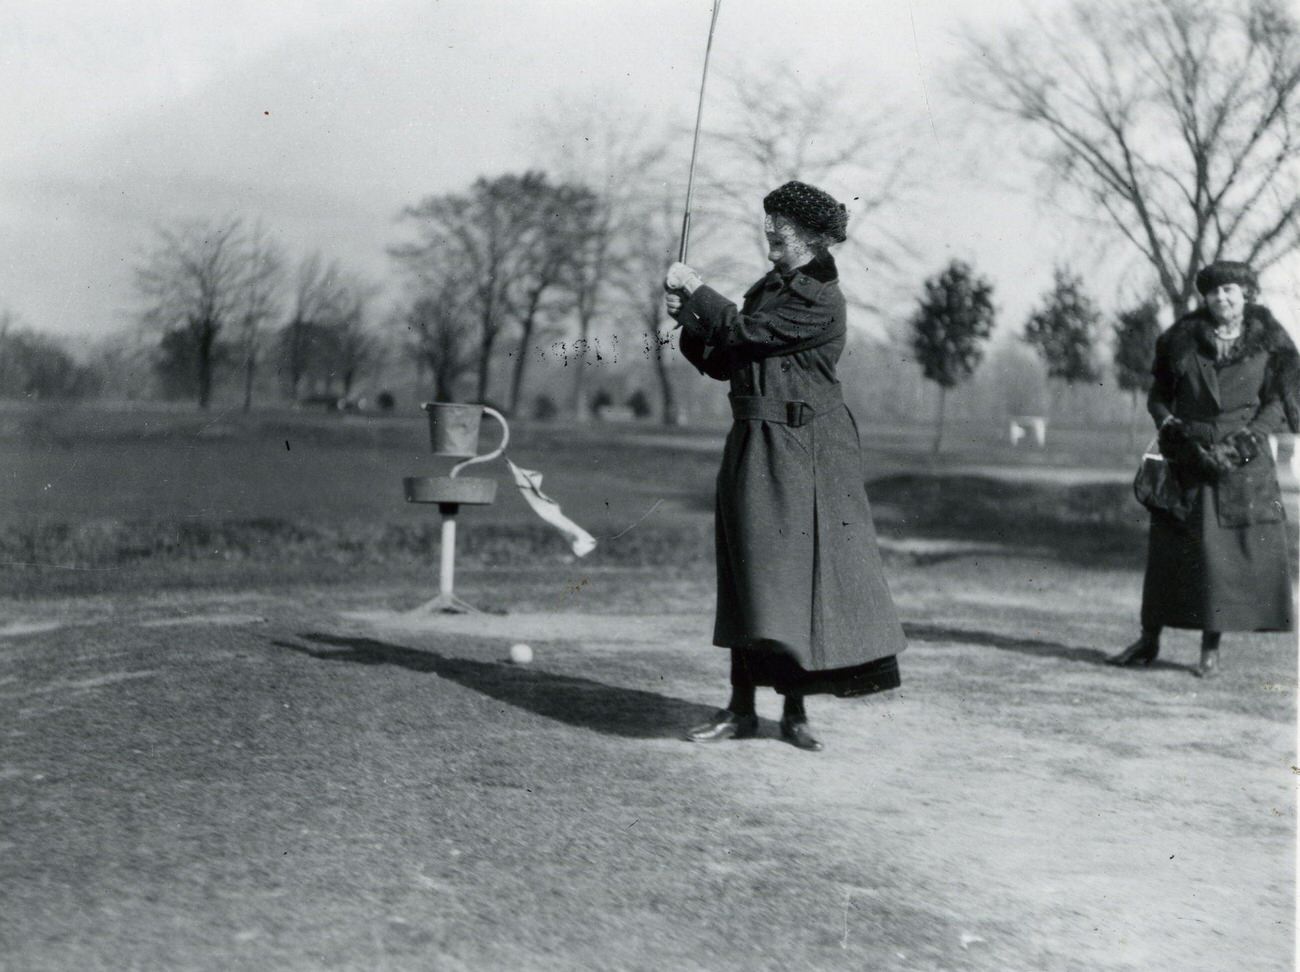 Woman golfer at Cincinnati Country Club, circa 1920s.